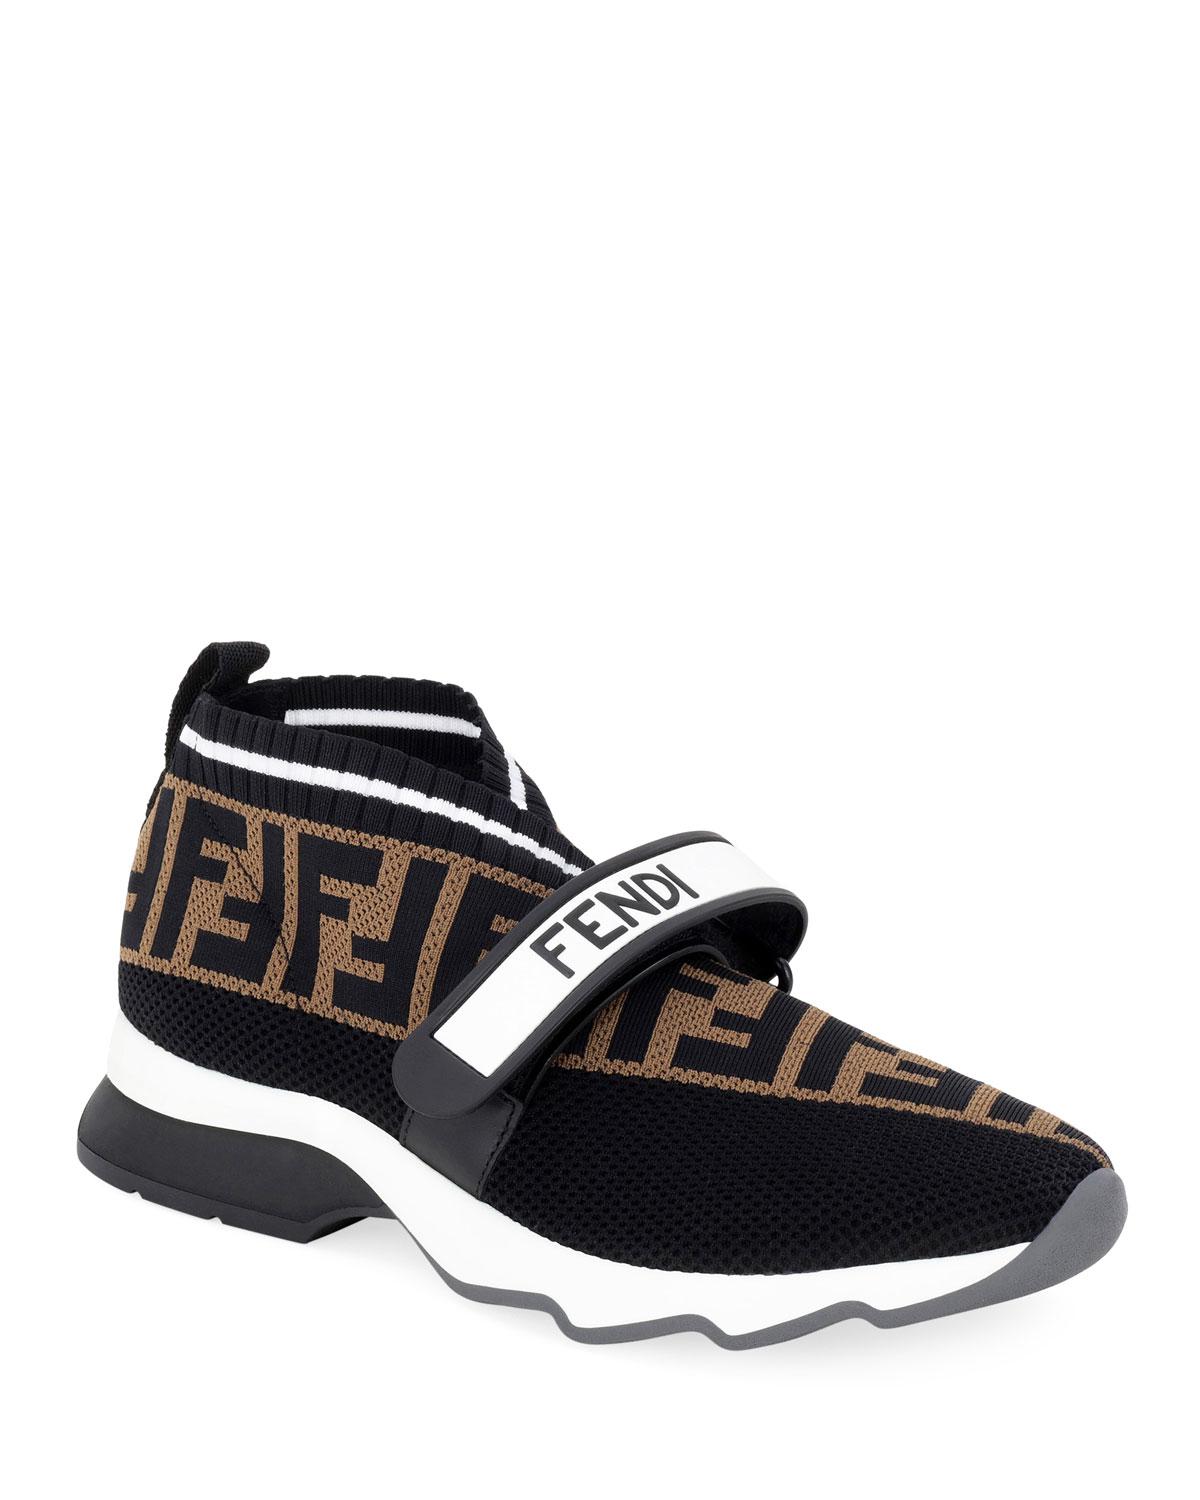 Fendi Rockoko Sneakers in Black - Lyst